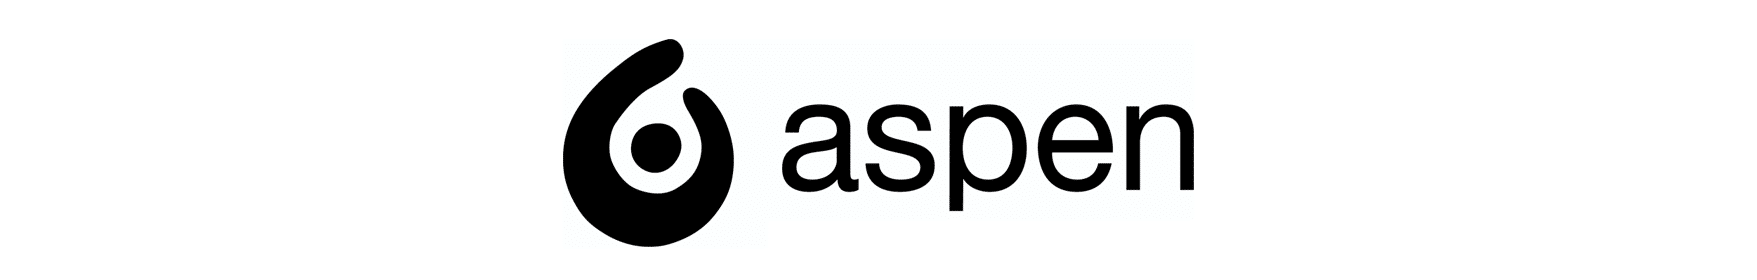 Aspen Pharmacare SAP to AWS customer case study